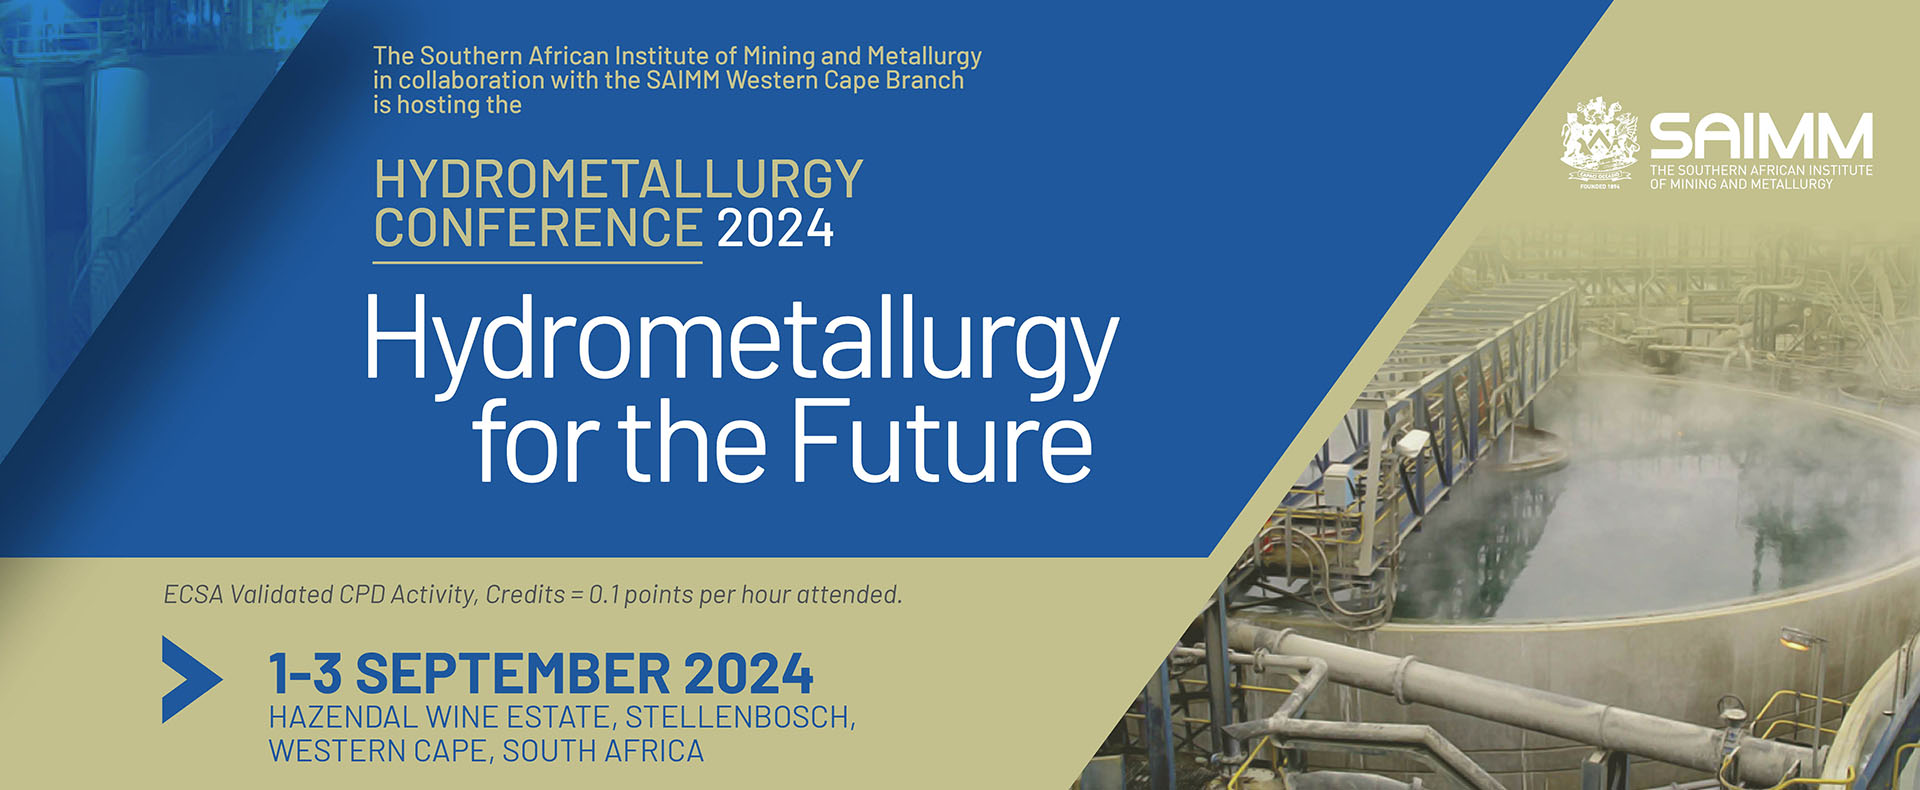 Hydrometallurgy Conference 2024 Banner 05092023